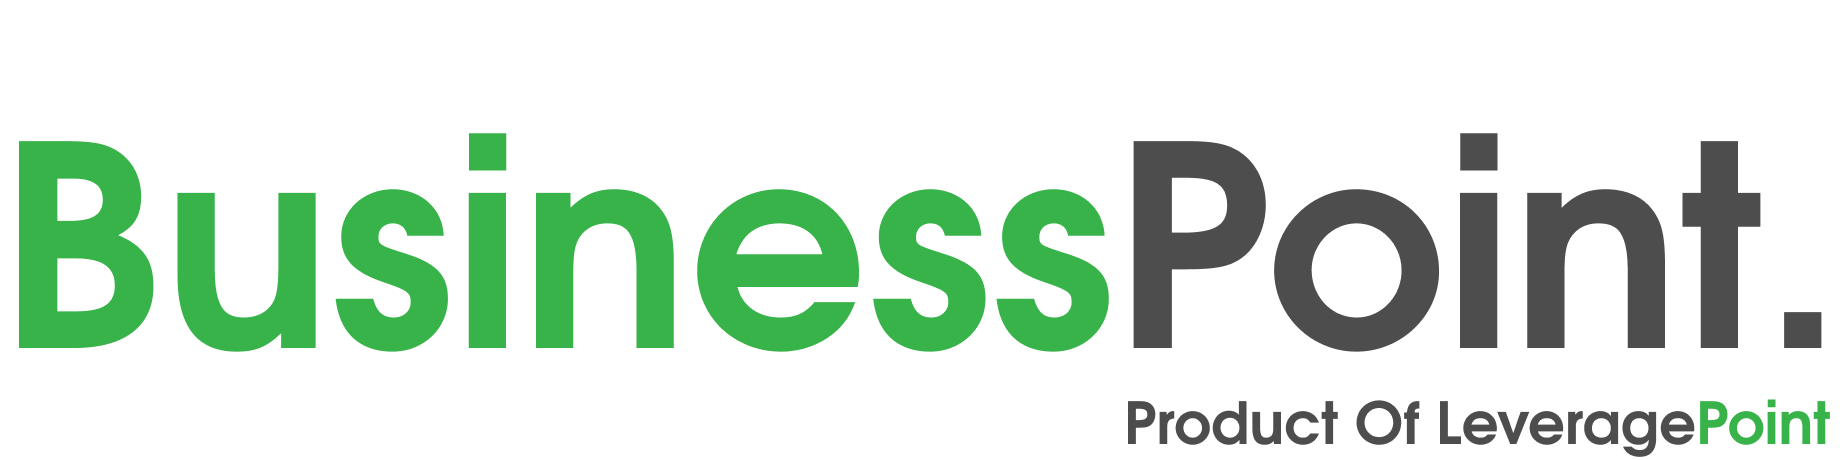 BusinessPoint- Full Business Solution logo